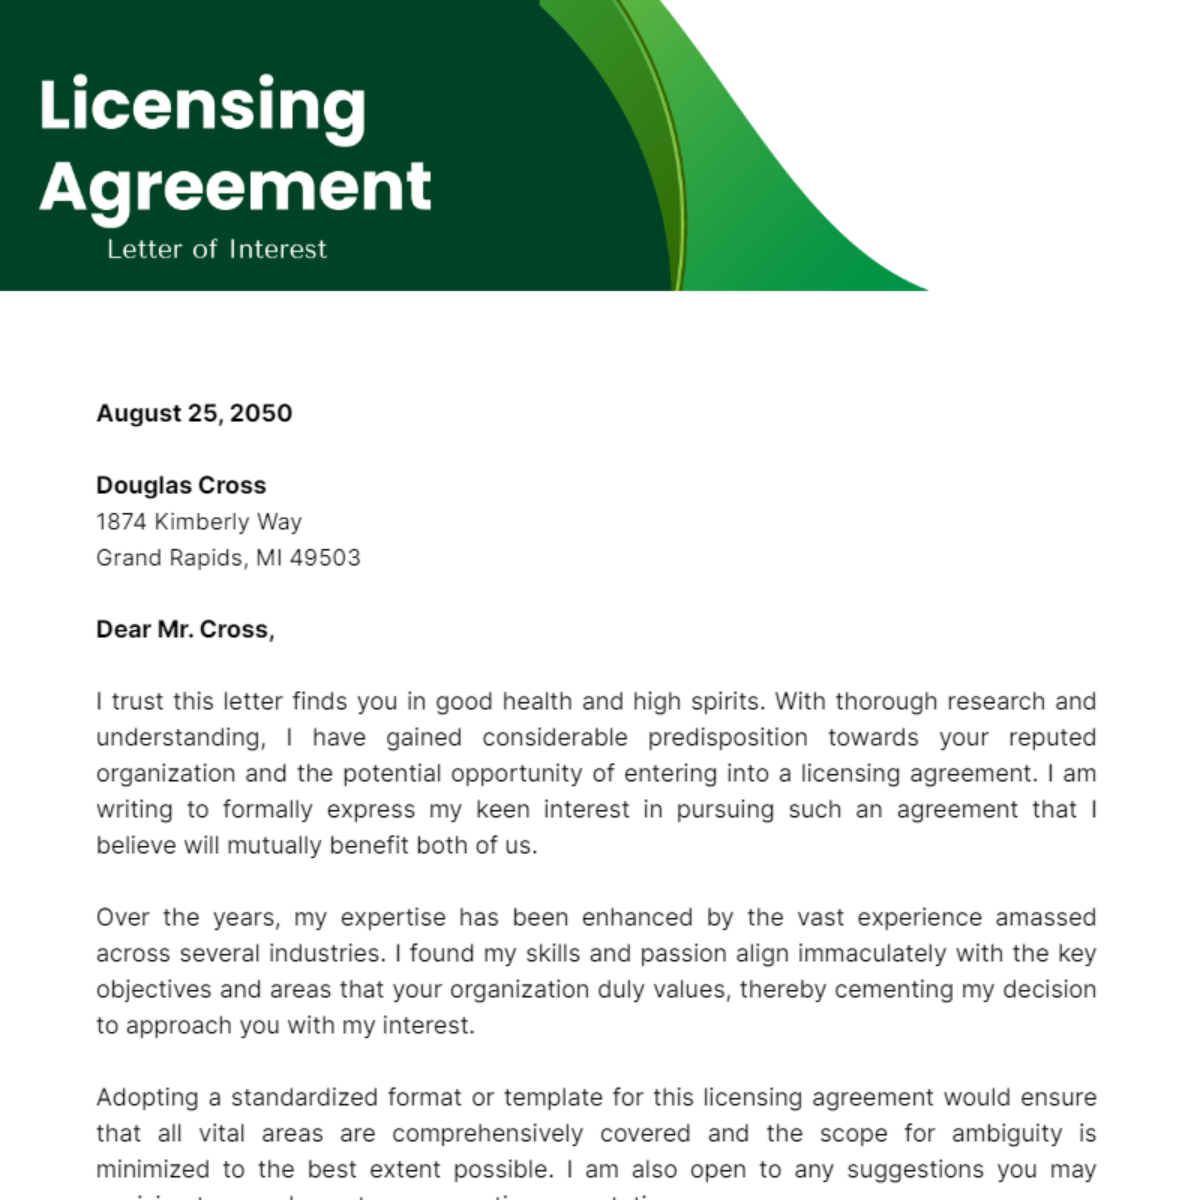 Licensing Agreement Letter of Interest Template